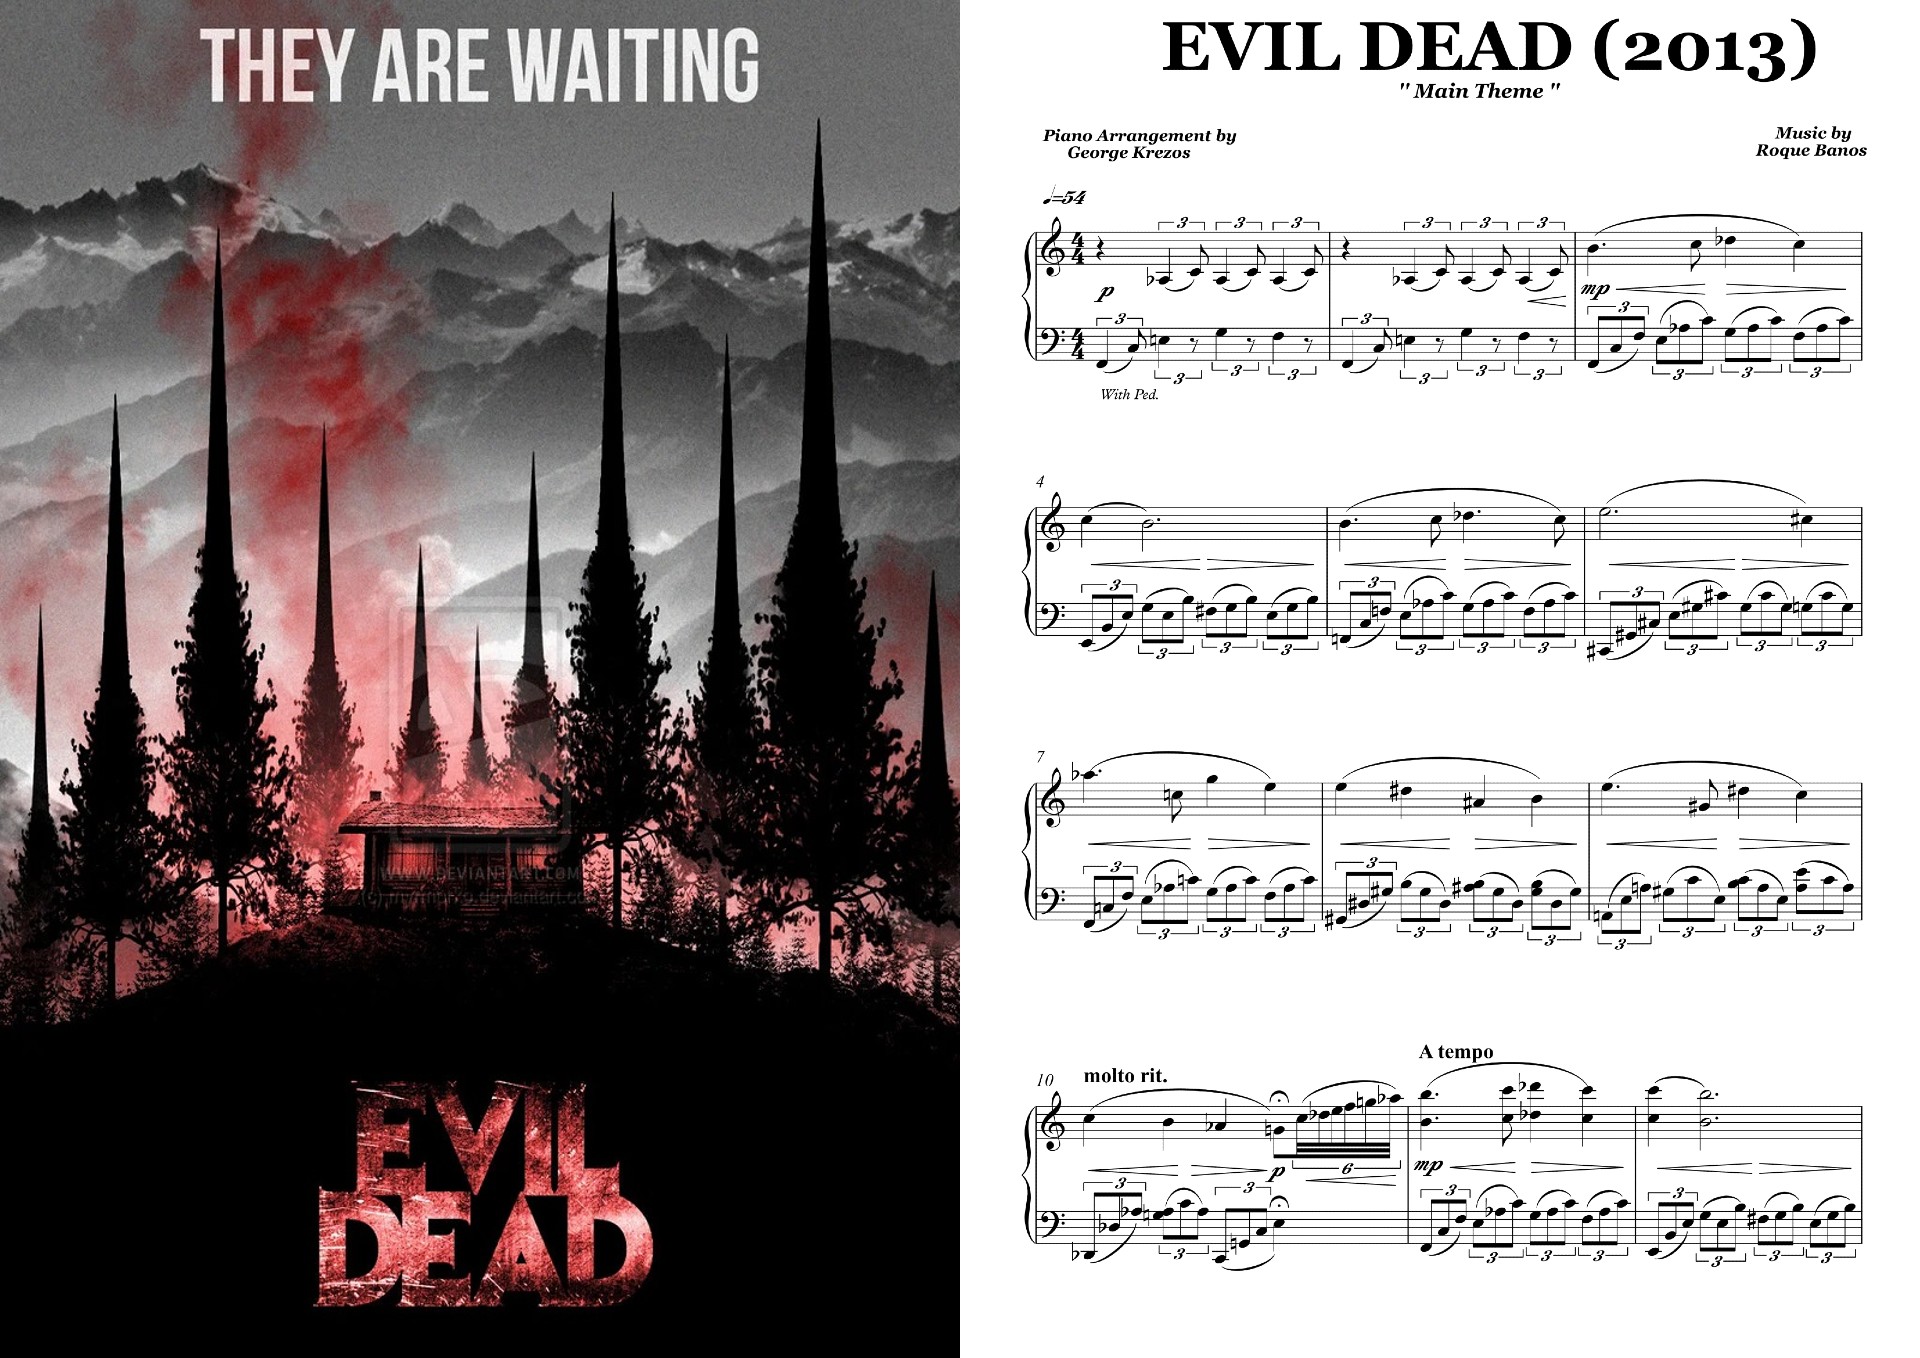 EVIL DEAD - Main Theme.jpg